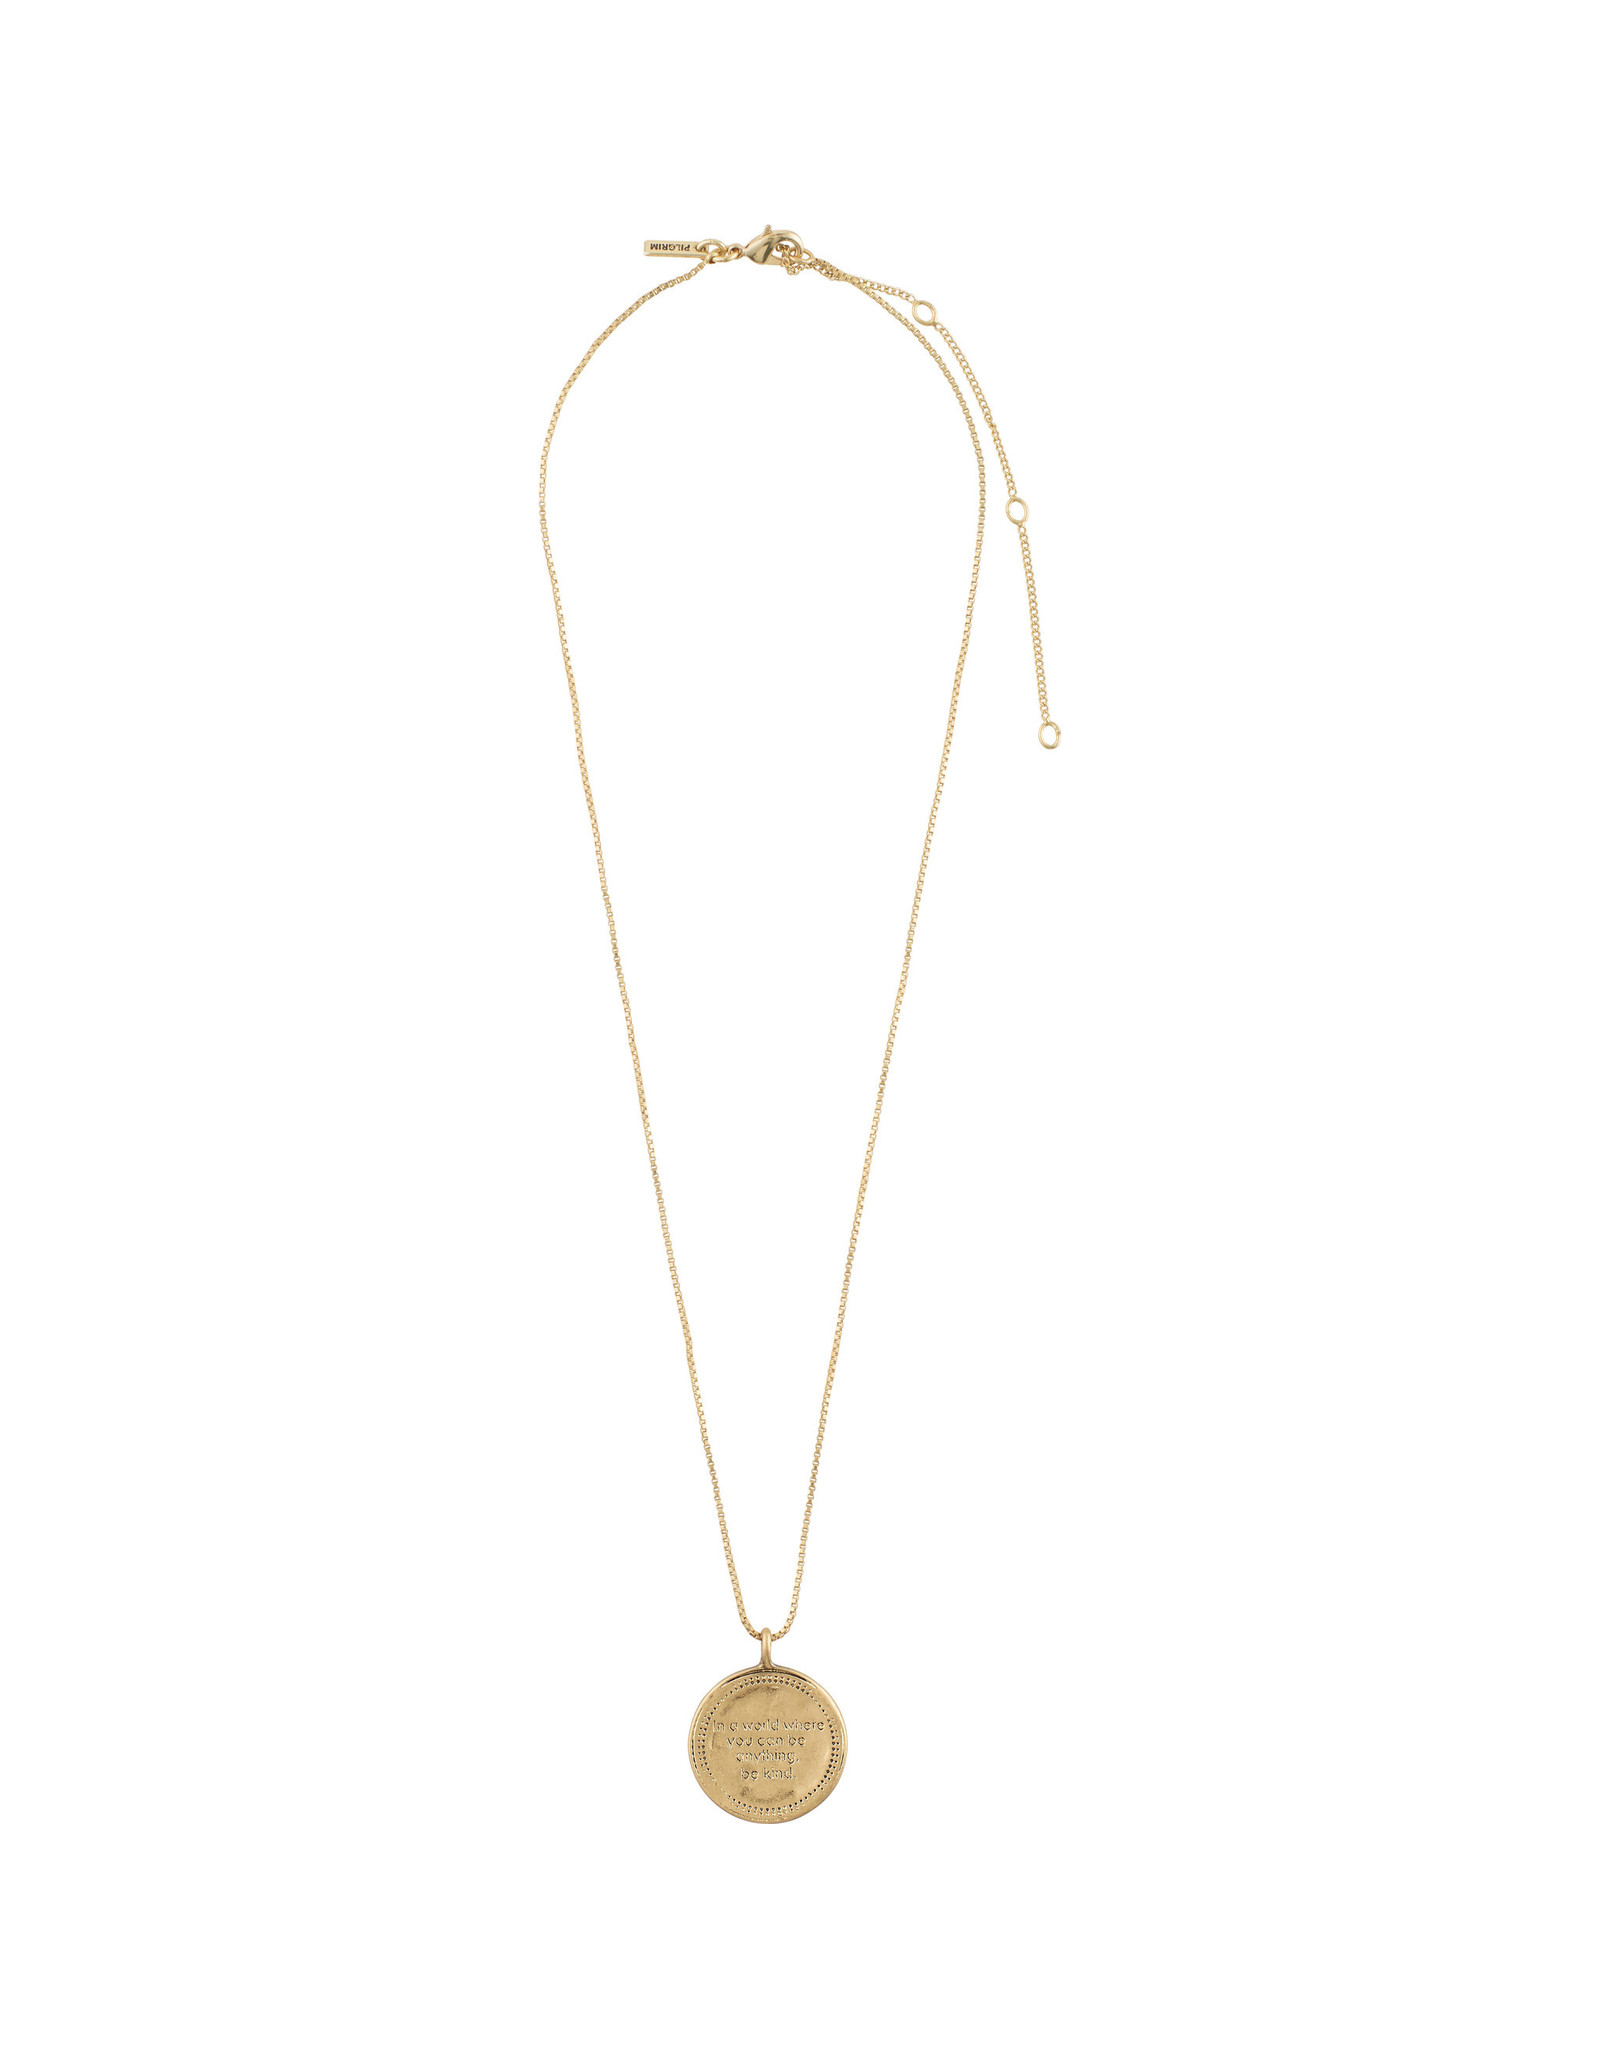 Pilgrim - Caris Necklace (Gold & Silver)